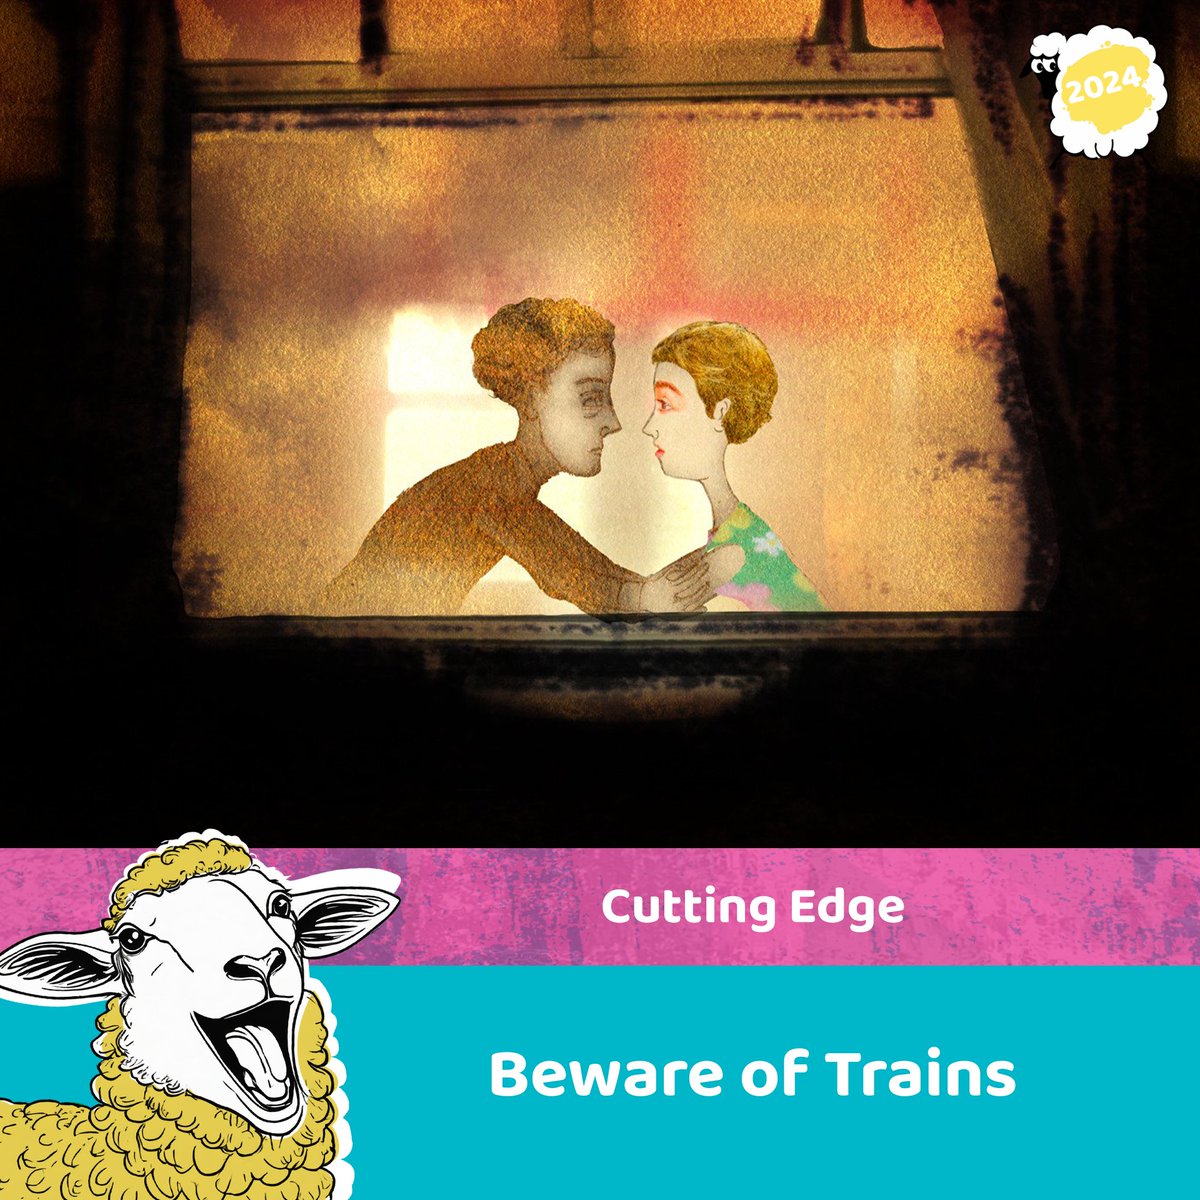 Winning the Cutting Edge award this year is Beware of Trains! Massive congratulations! #BAA24